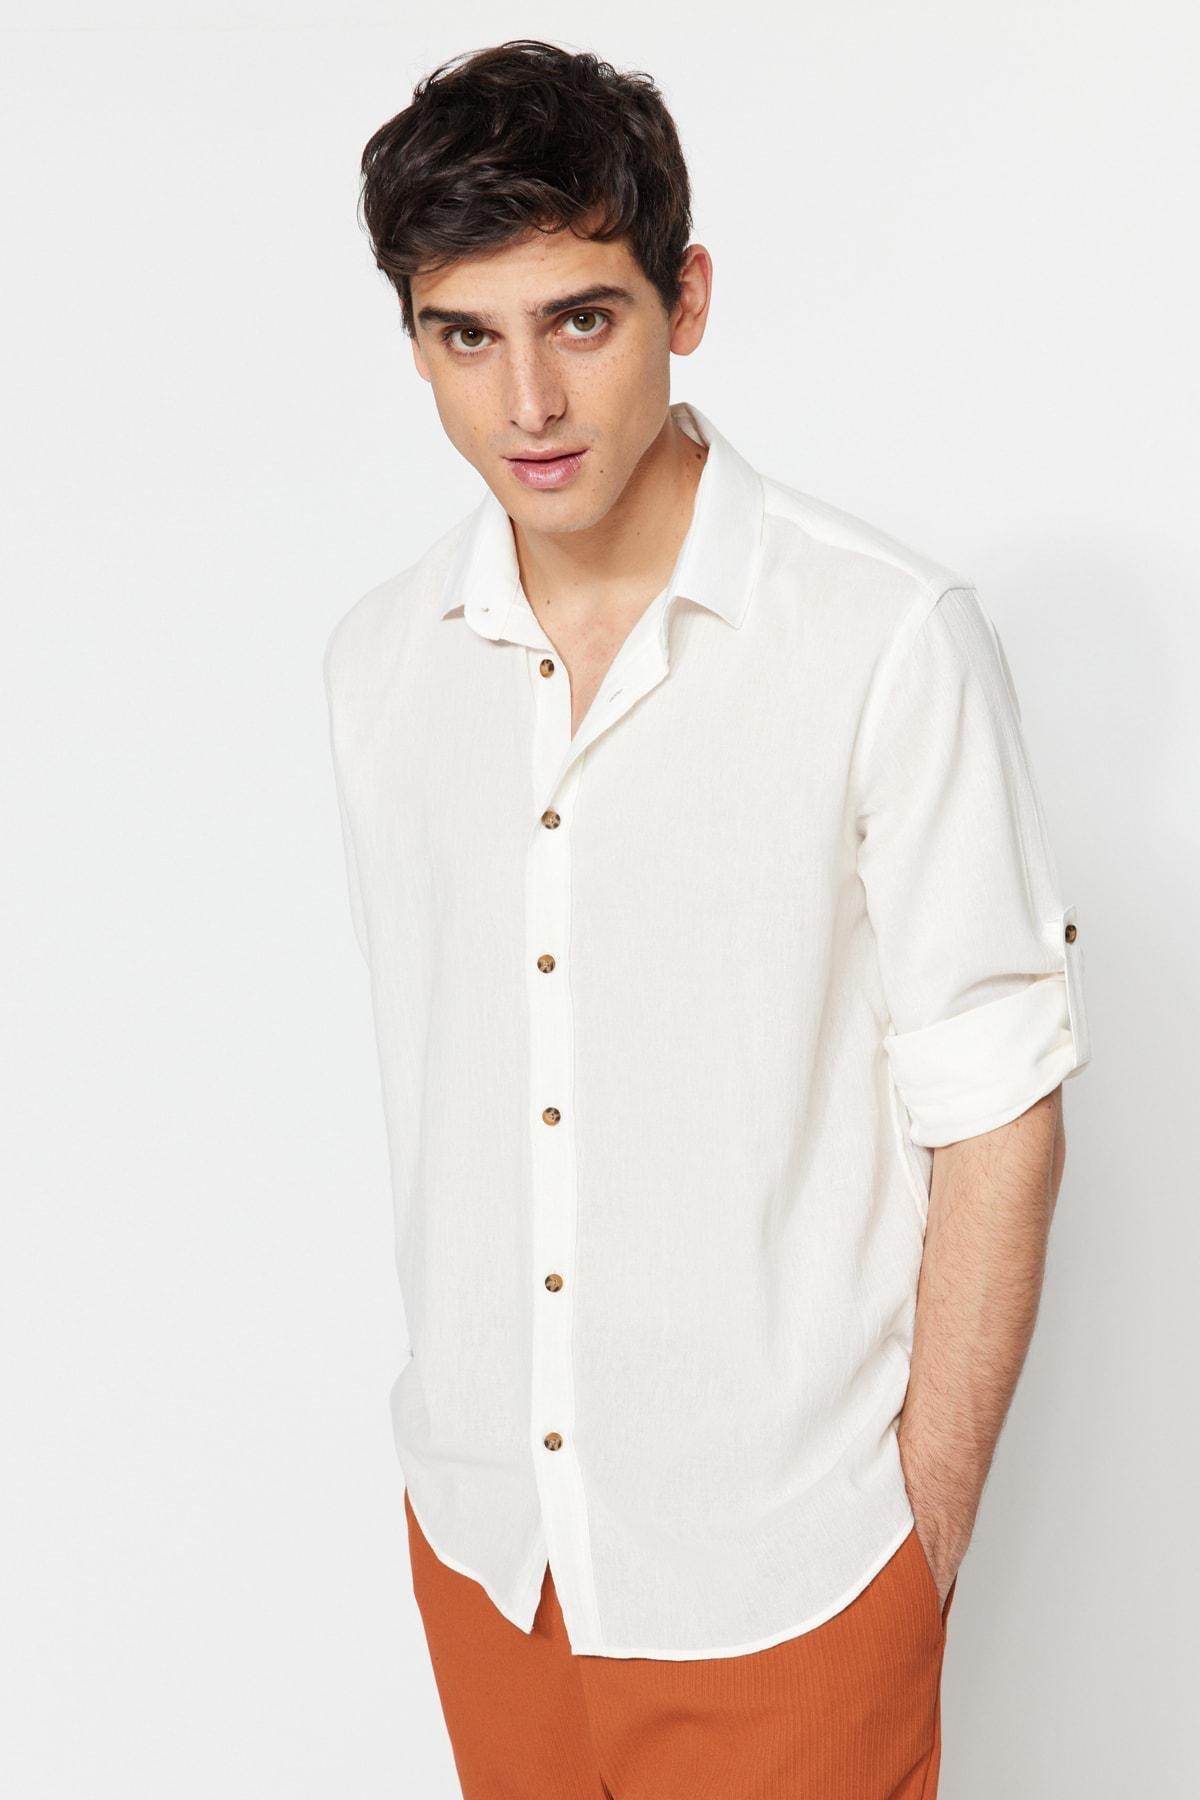 Trendyol - White Cotton Shirt